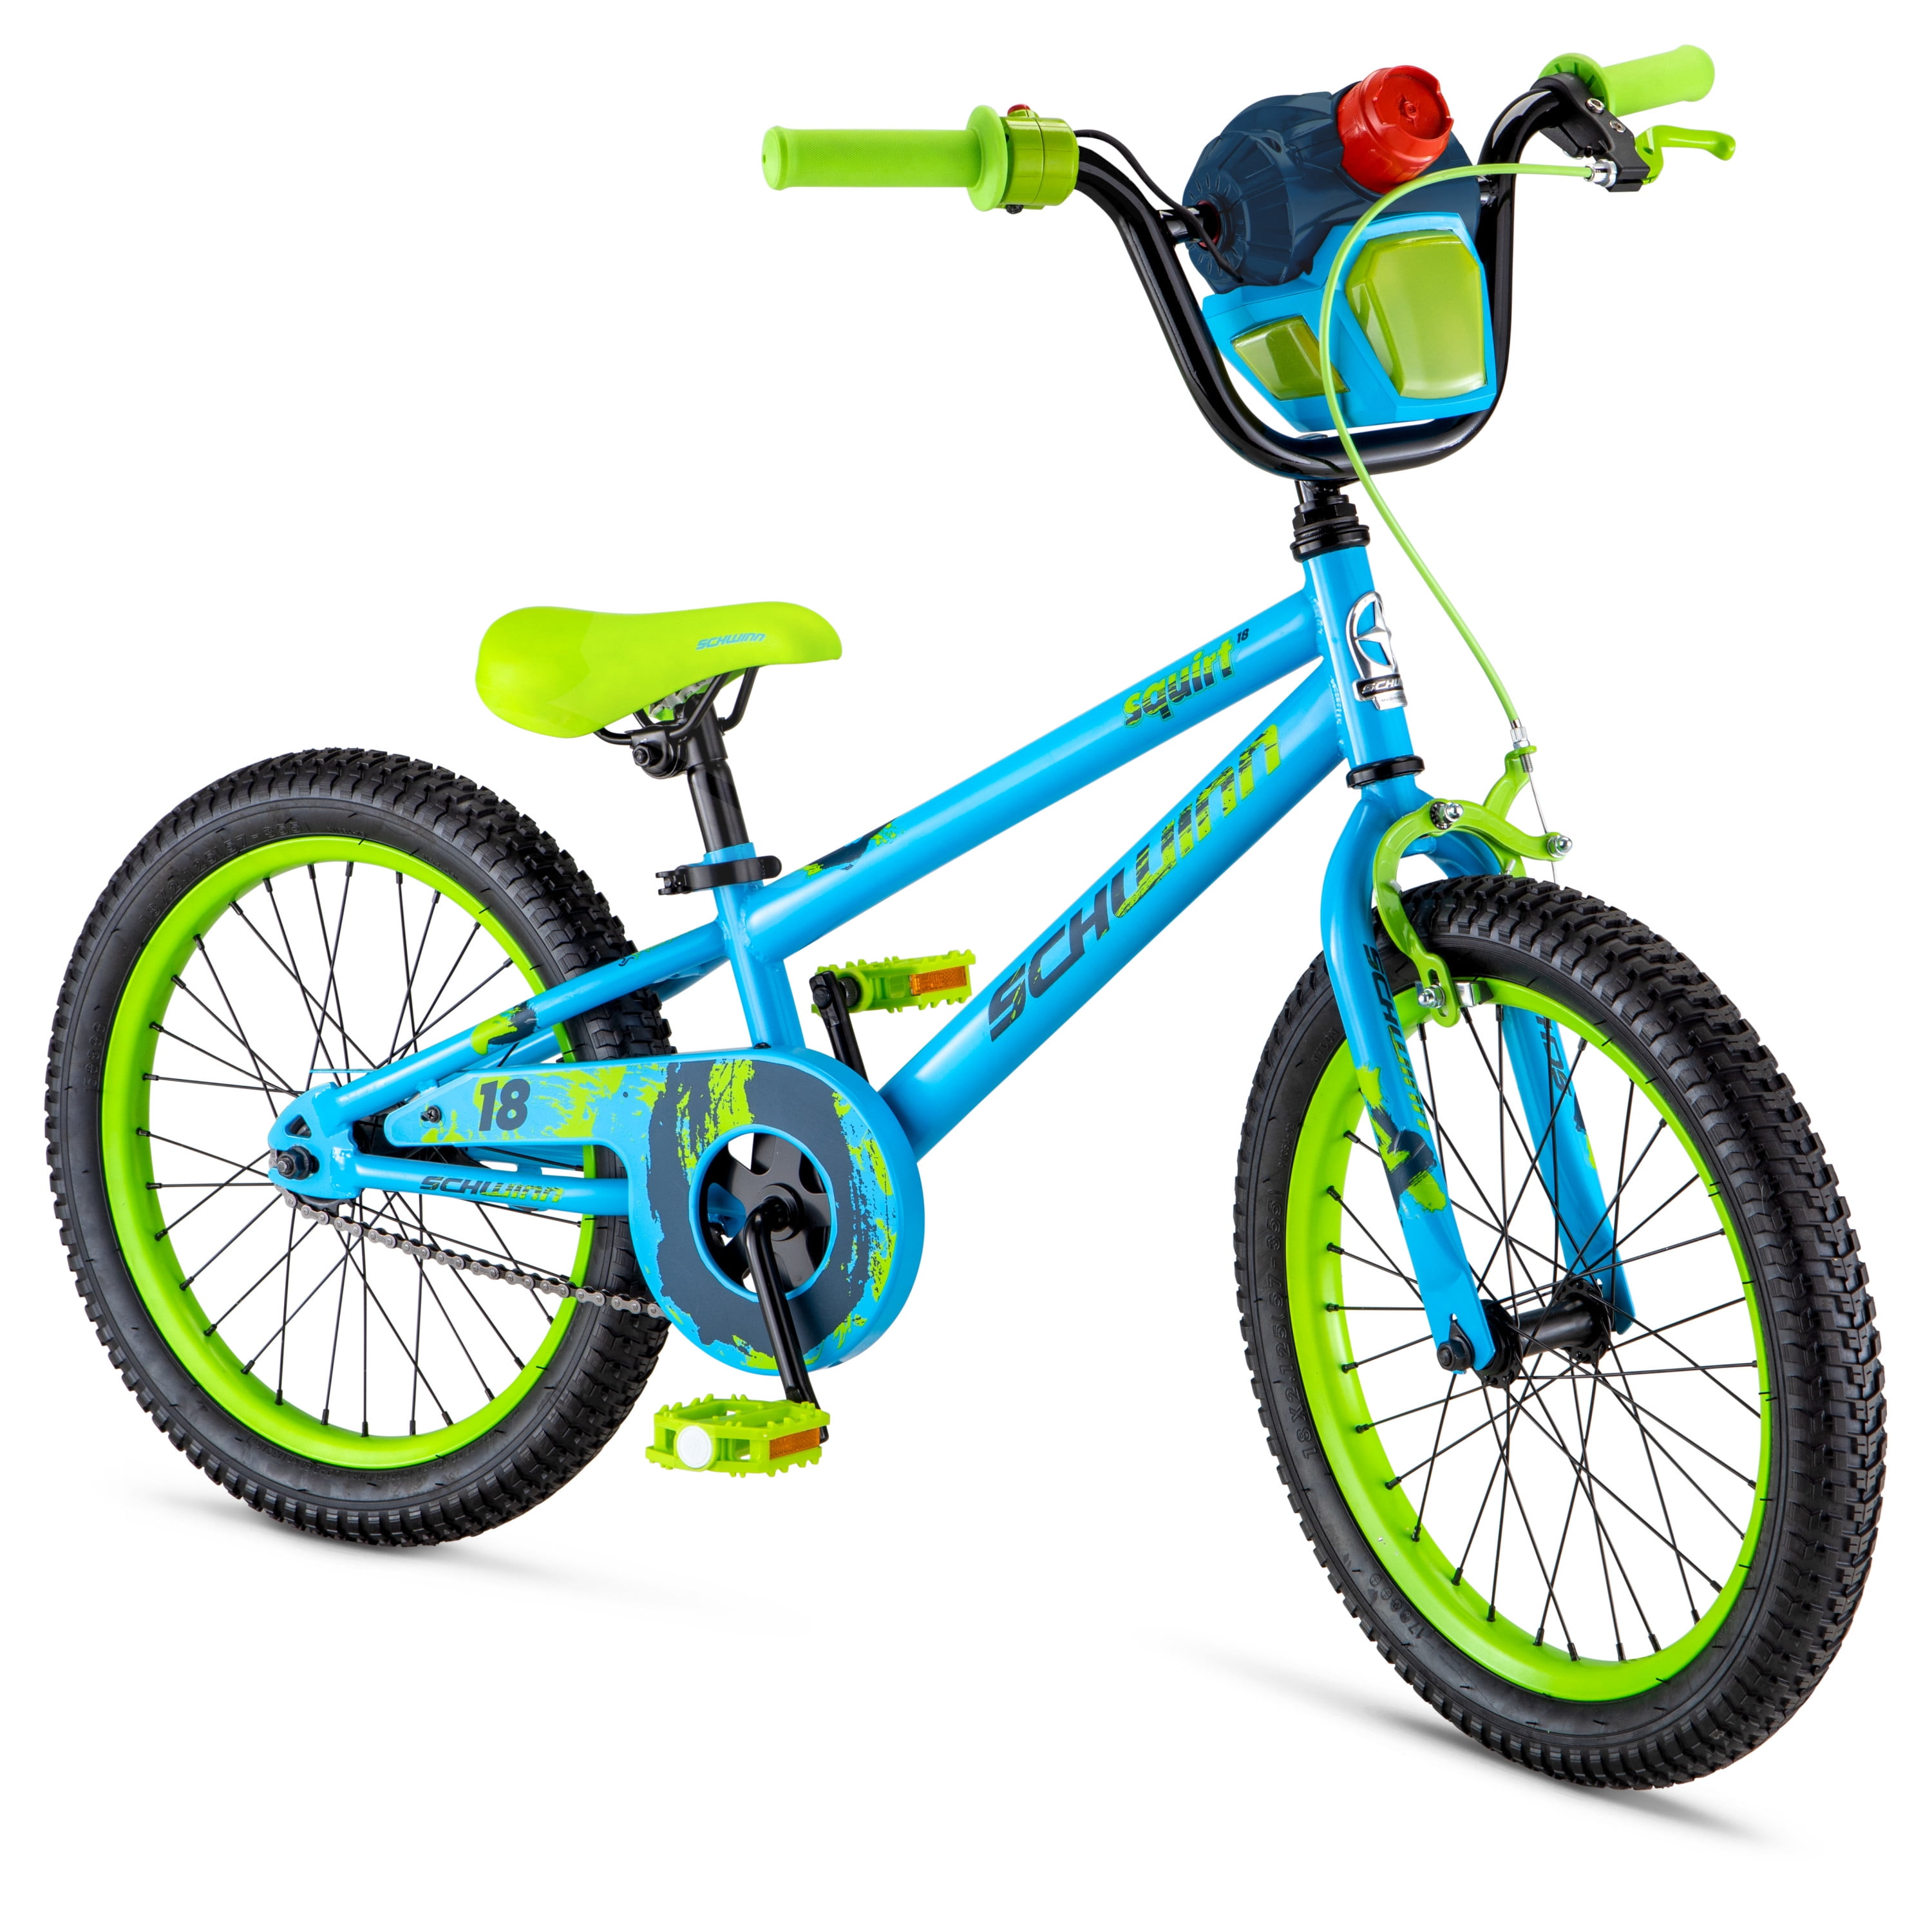 Schwinn Squirt Sidewalk Kids Bike w/ Built-in Water Cannon & 18" Wheels (Blue and Green) $98 + Free Shipping